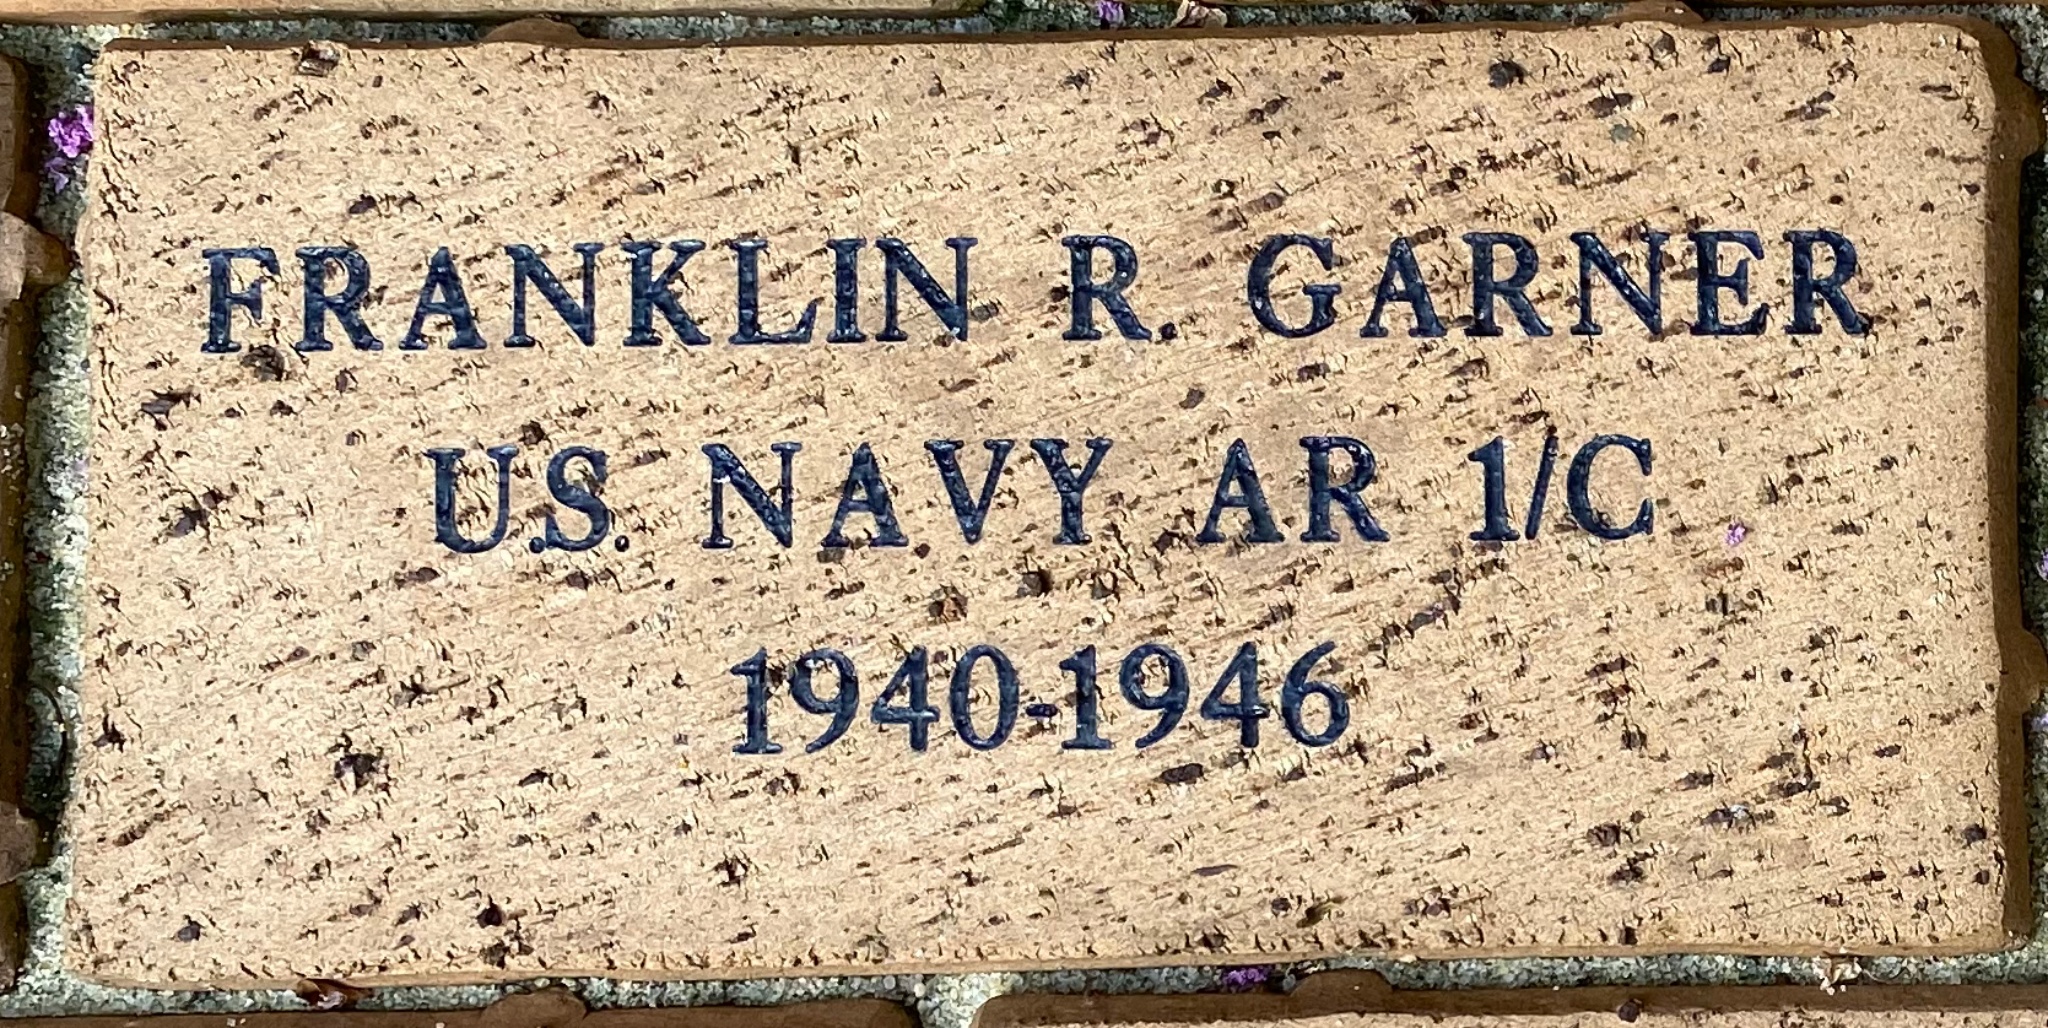 FRANKLIN R. GARNER U.S. NAVY AR 1/C 1940-1946